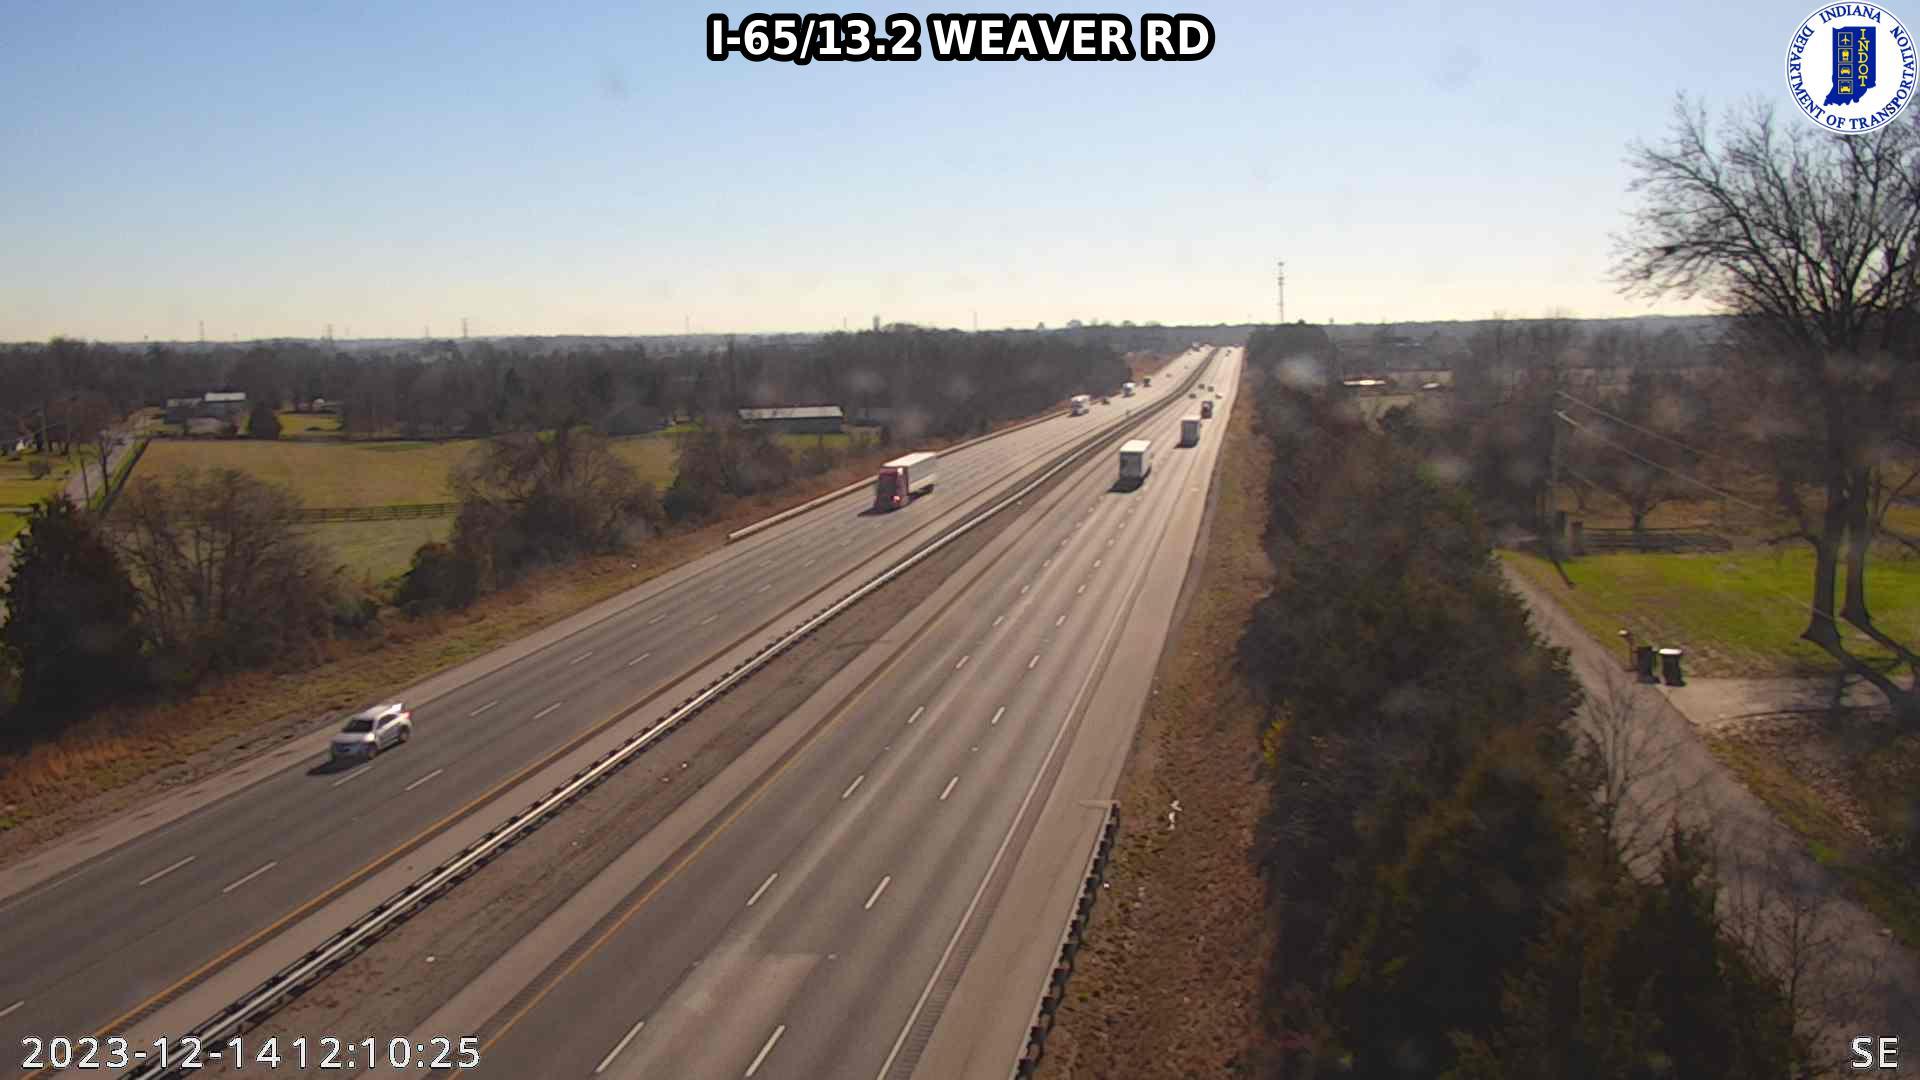 Slatecut: I-65: I-65/13.2 WEAVER RD Traffic Camera